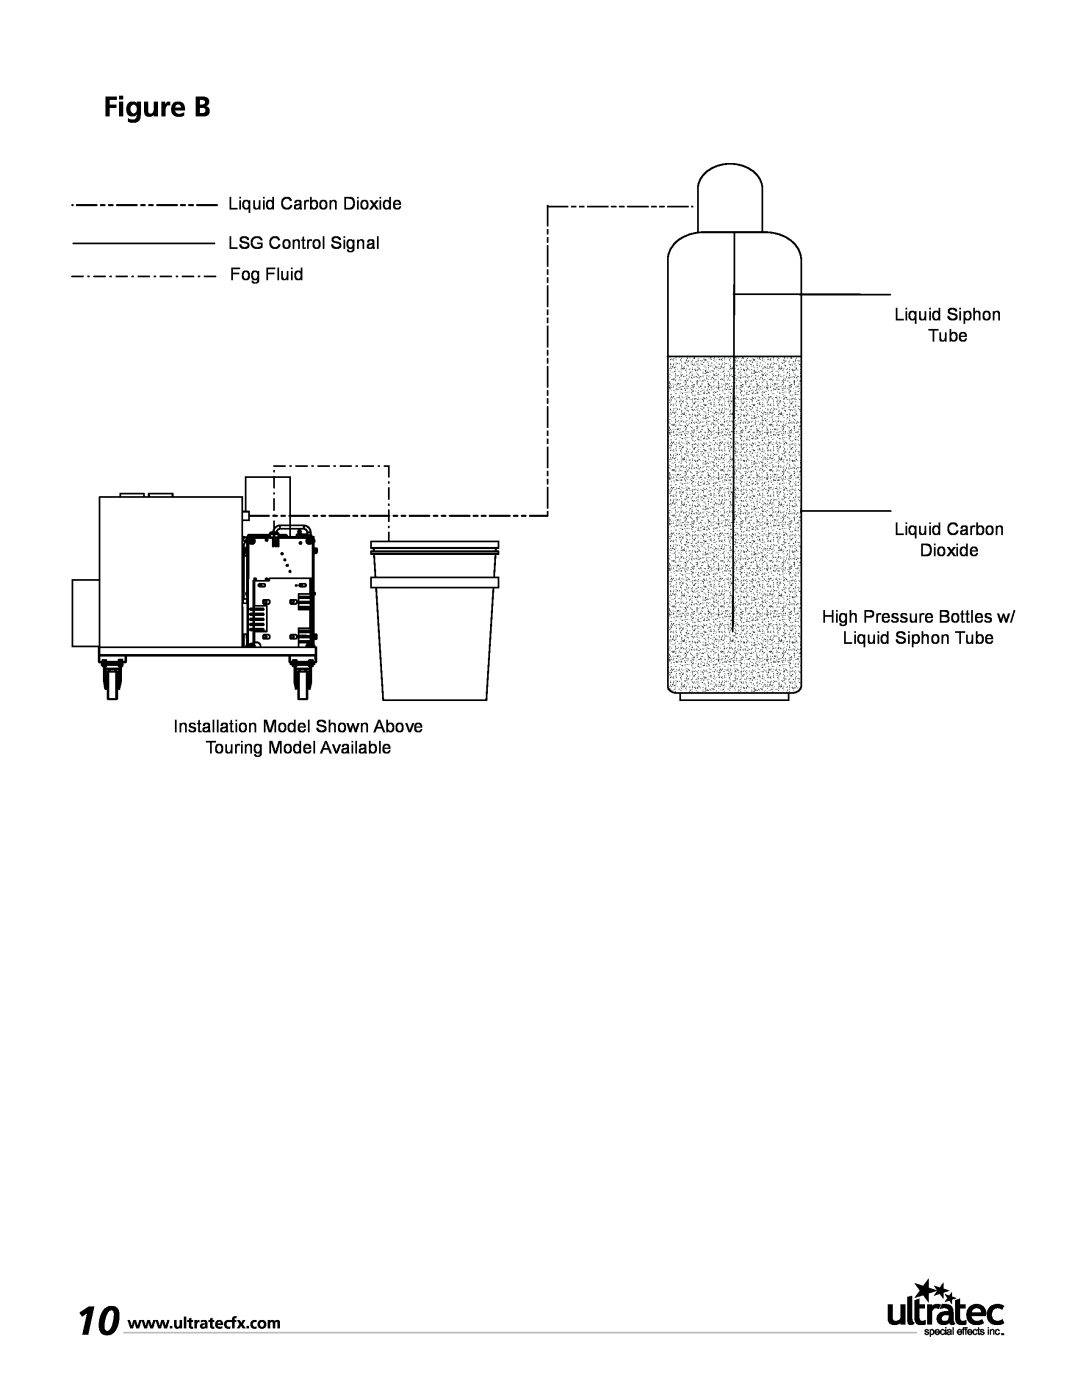 Ultratec PFI-9D manual Figure B, Liquid Carbon Dioxide LSG Control Signal Fog Fluid Liquid Siphon Tube 